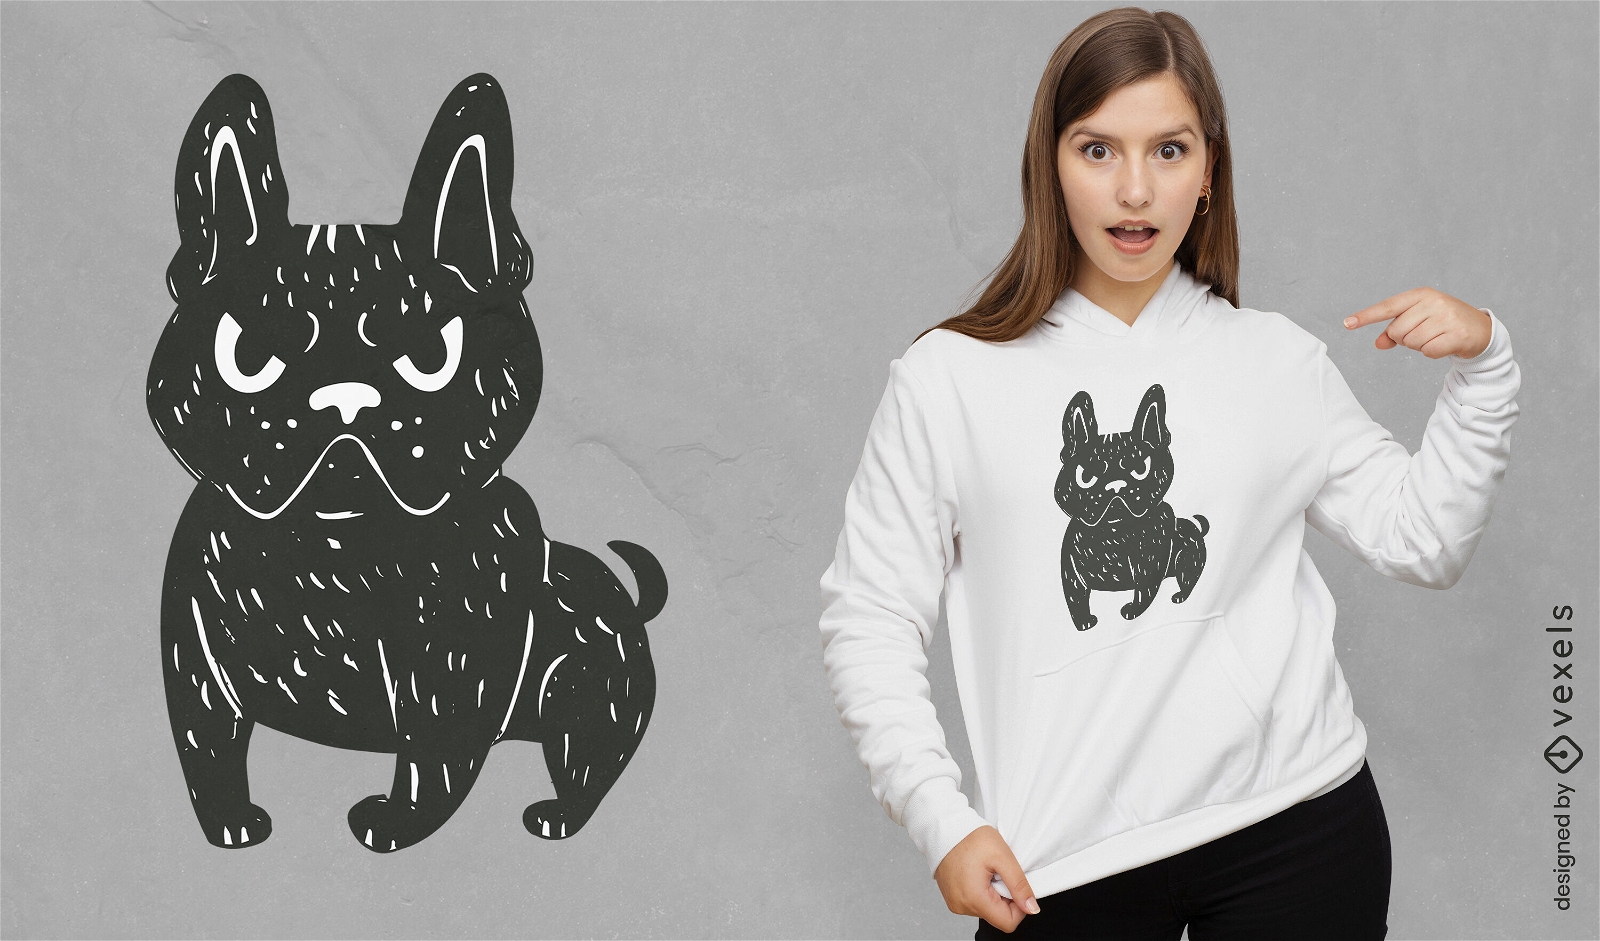 Angry french bulldog dog t-shirt design